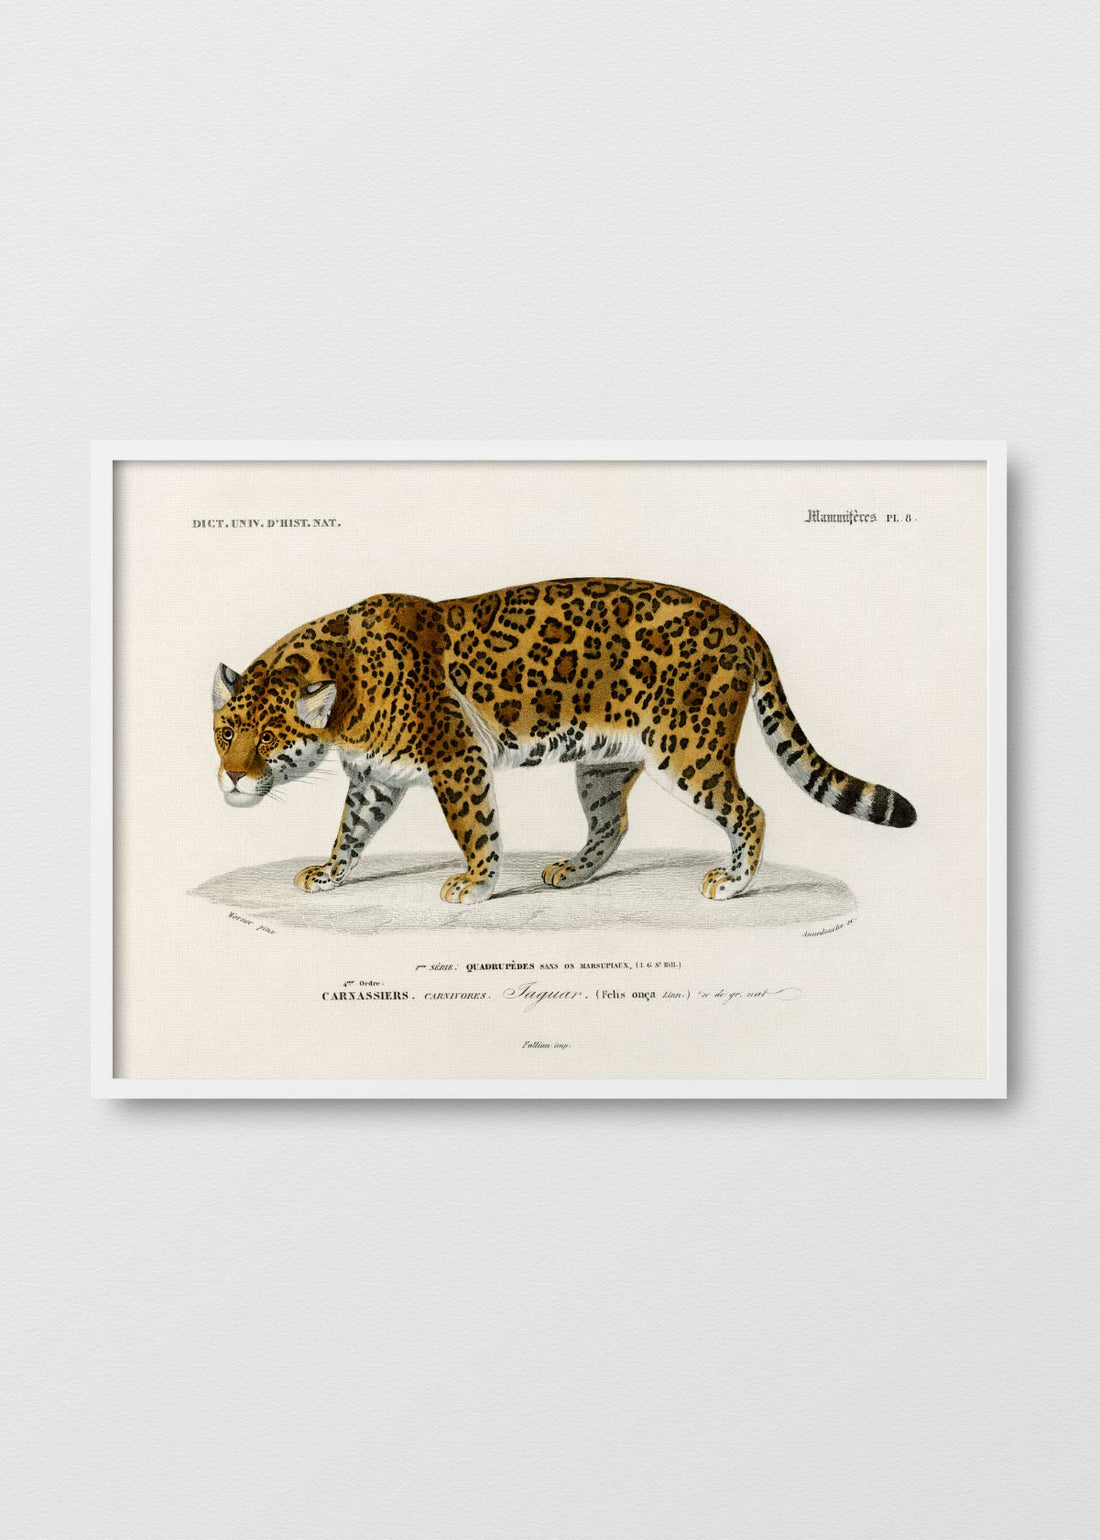 Jaguar - Testimoniaprints